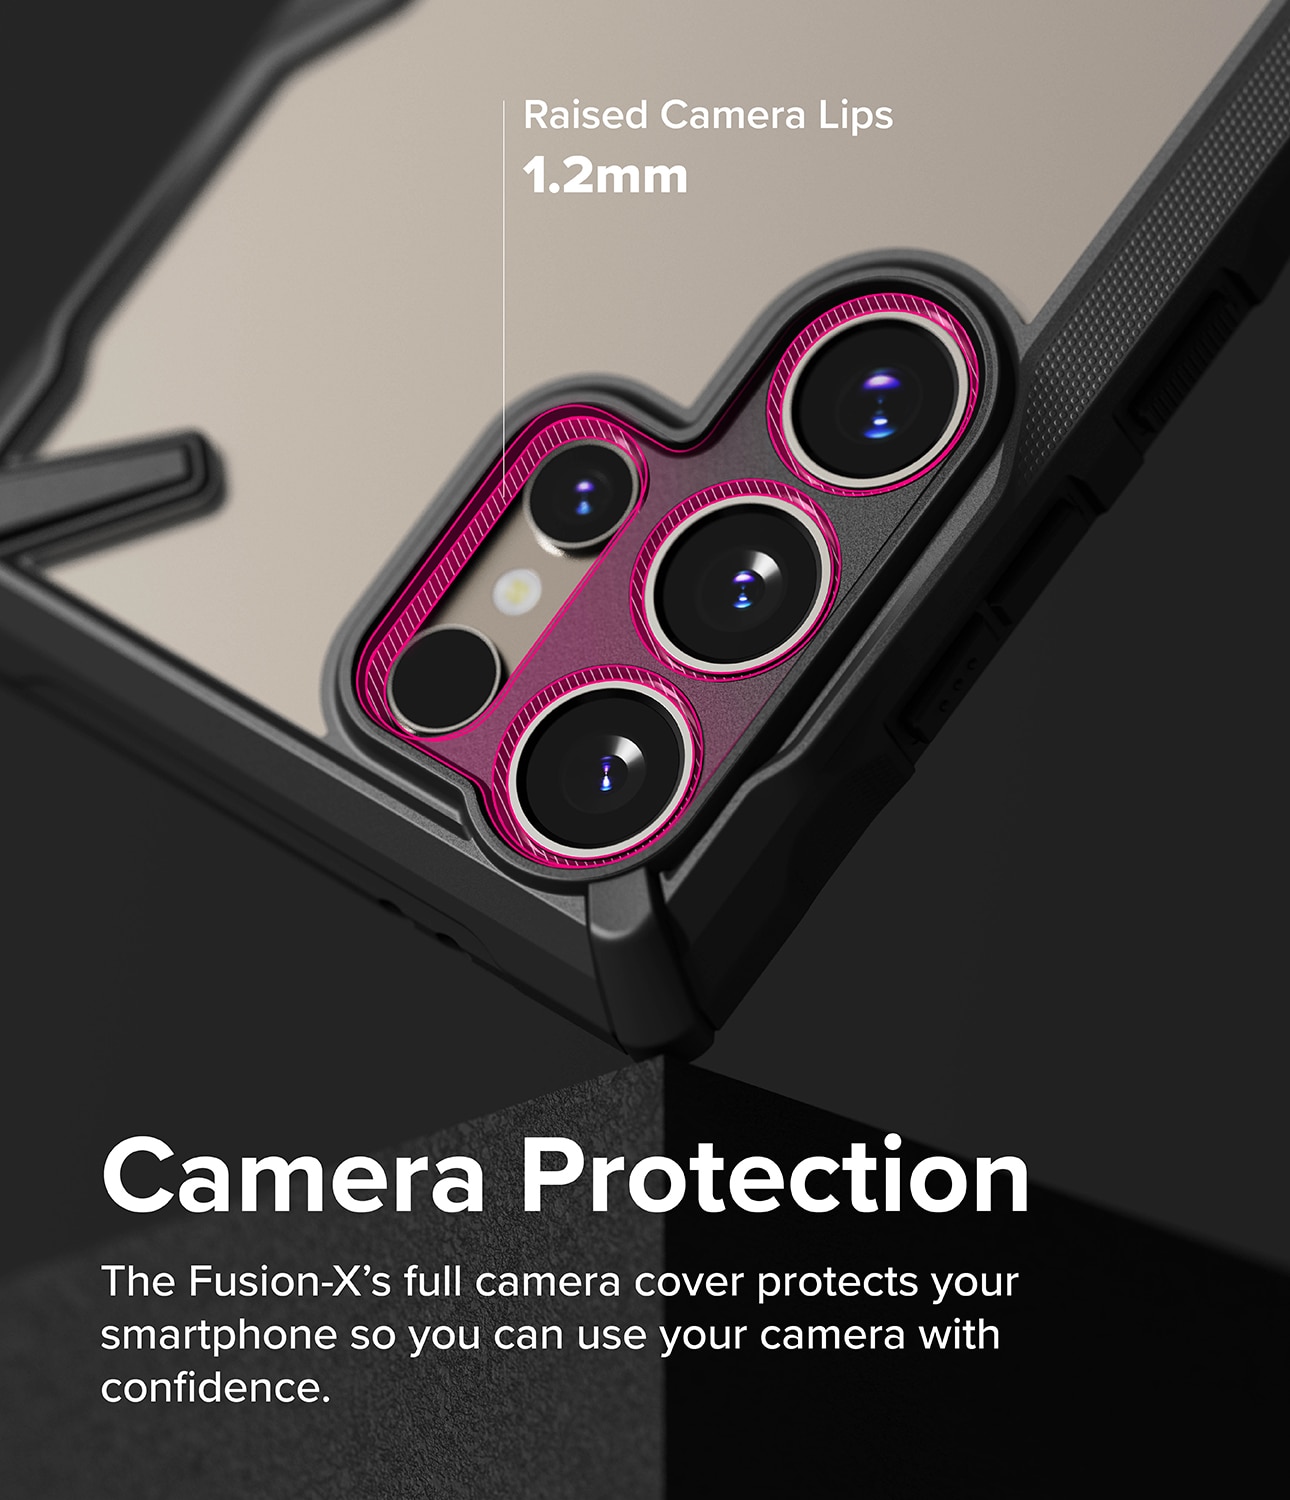 Fusion X Case Samsung Galaxy S24 Ultra musta